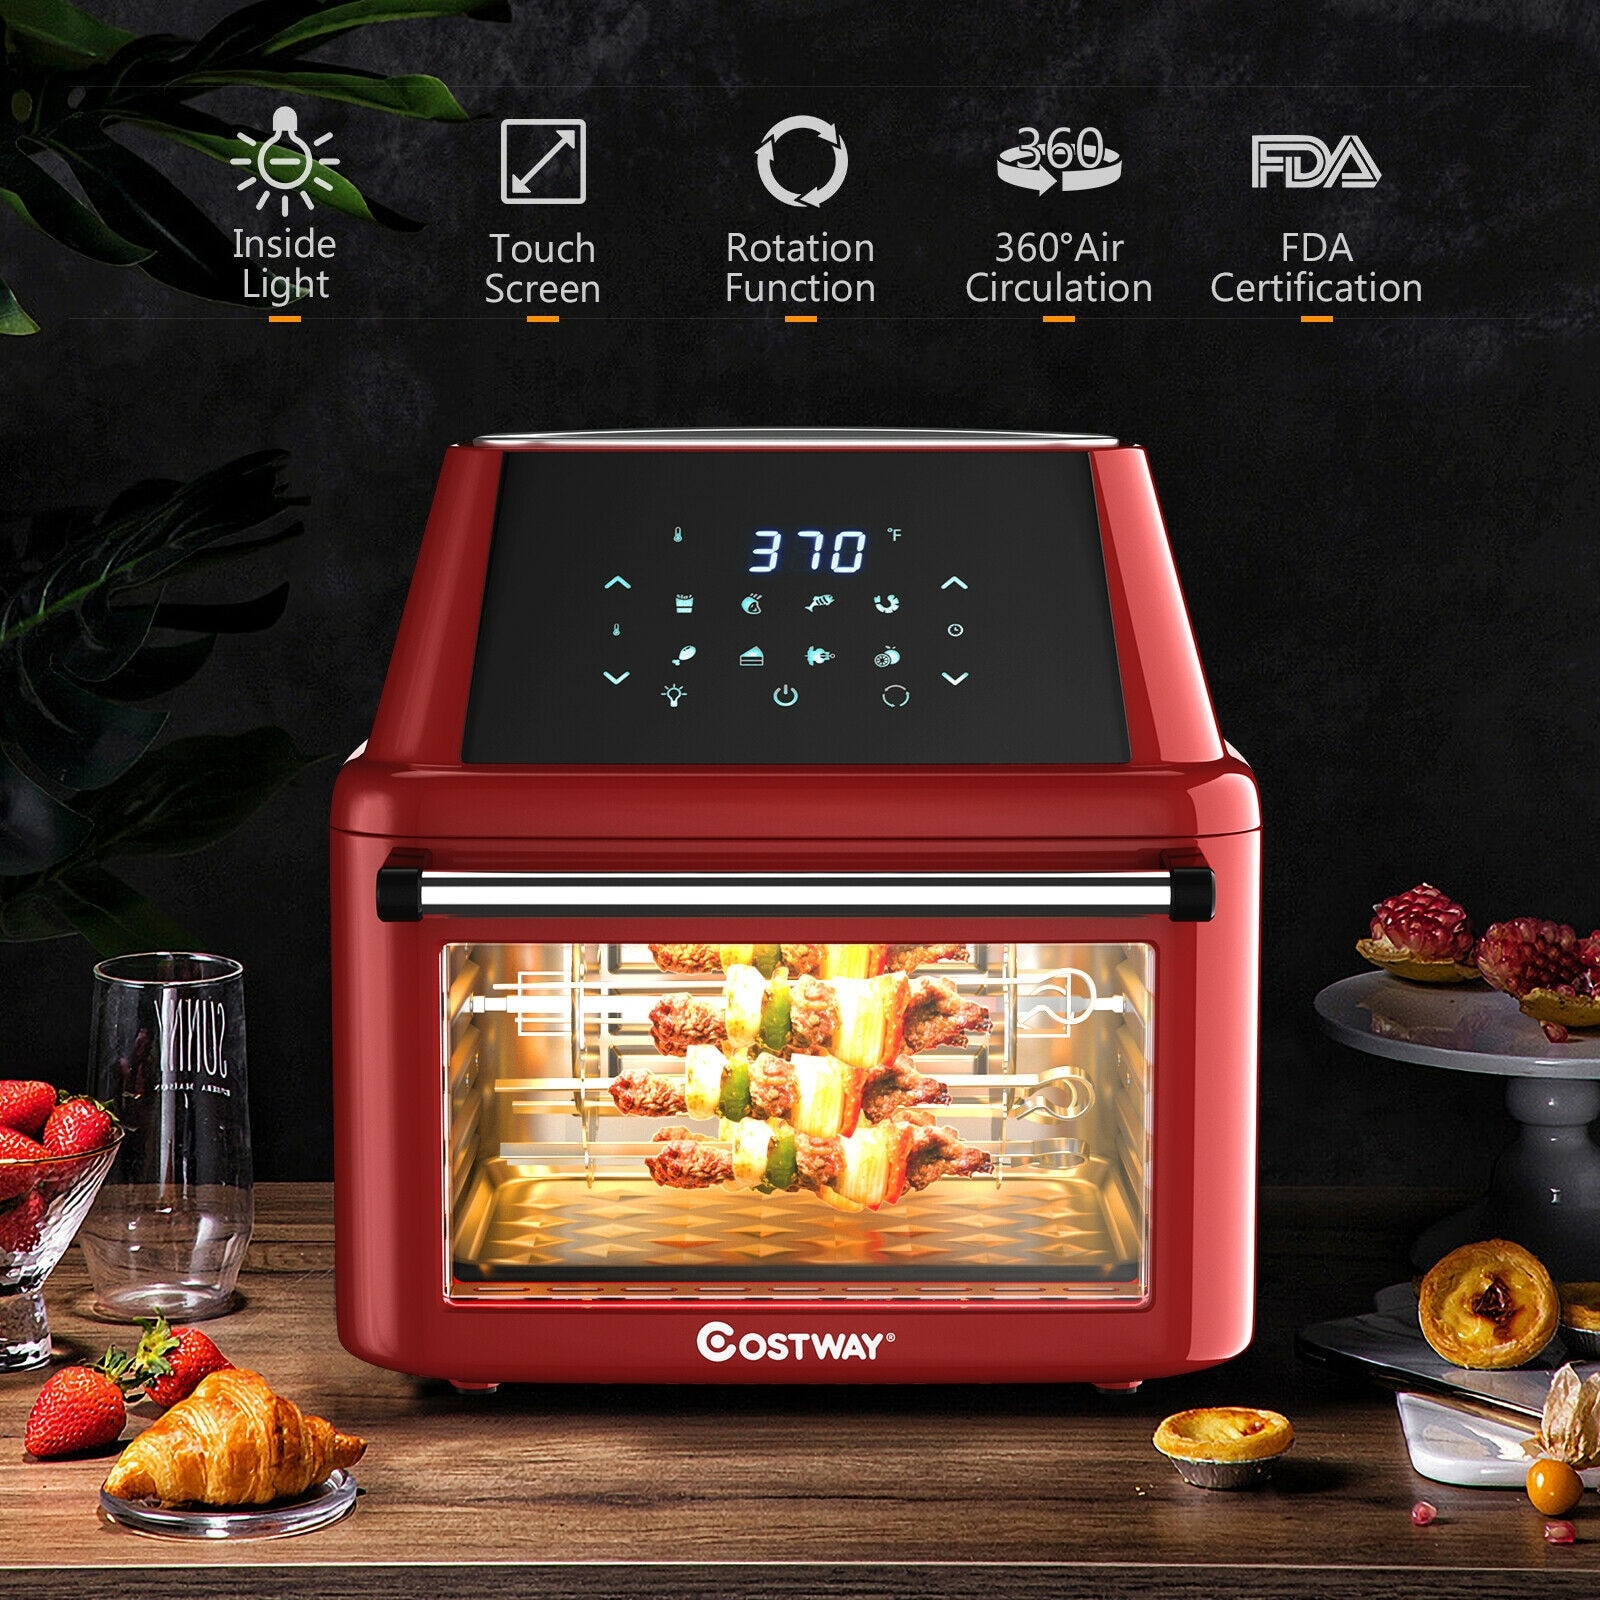 PARIS RHÔNE Air Fryer Oven 19QT, Family-Sized Toaster Oven